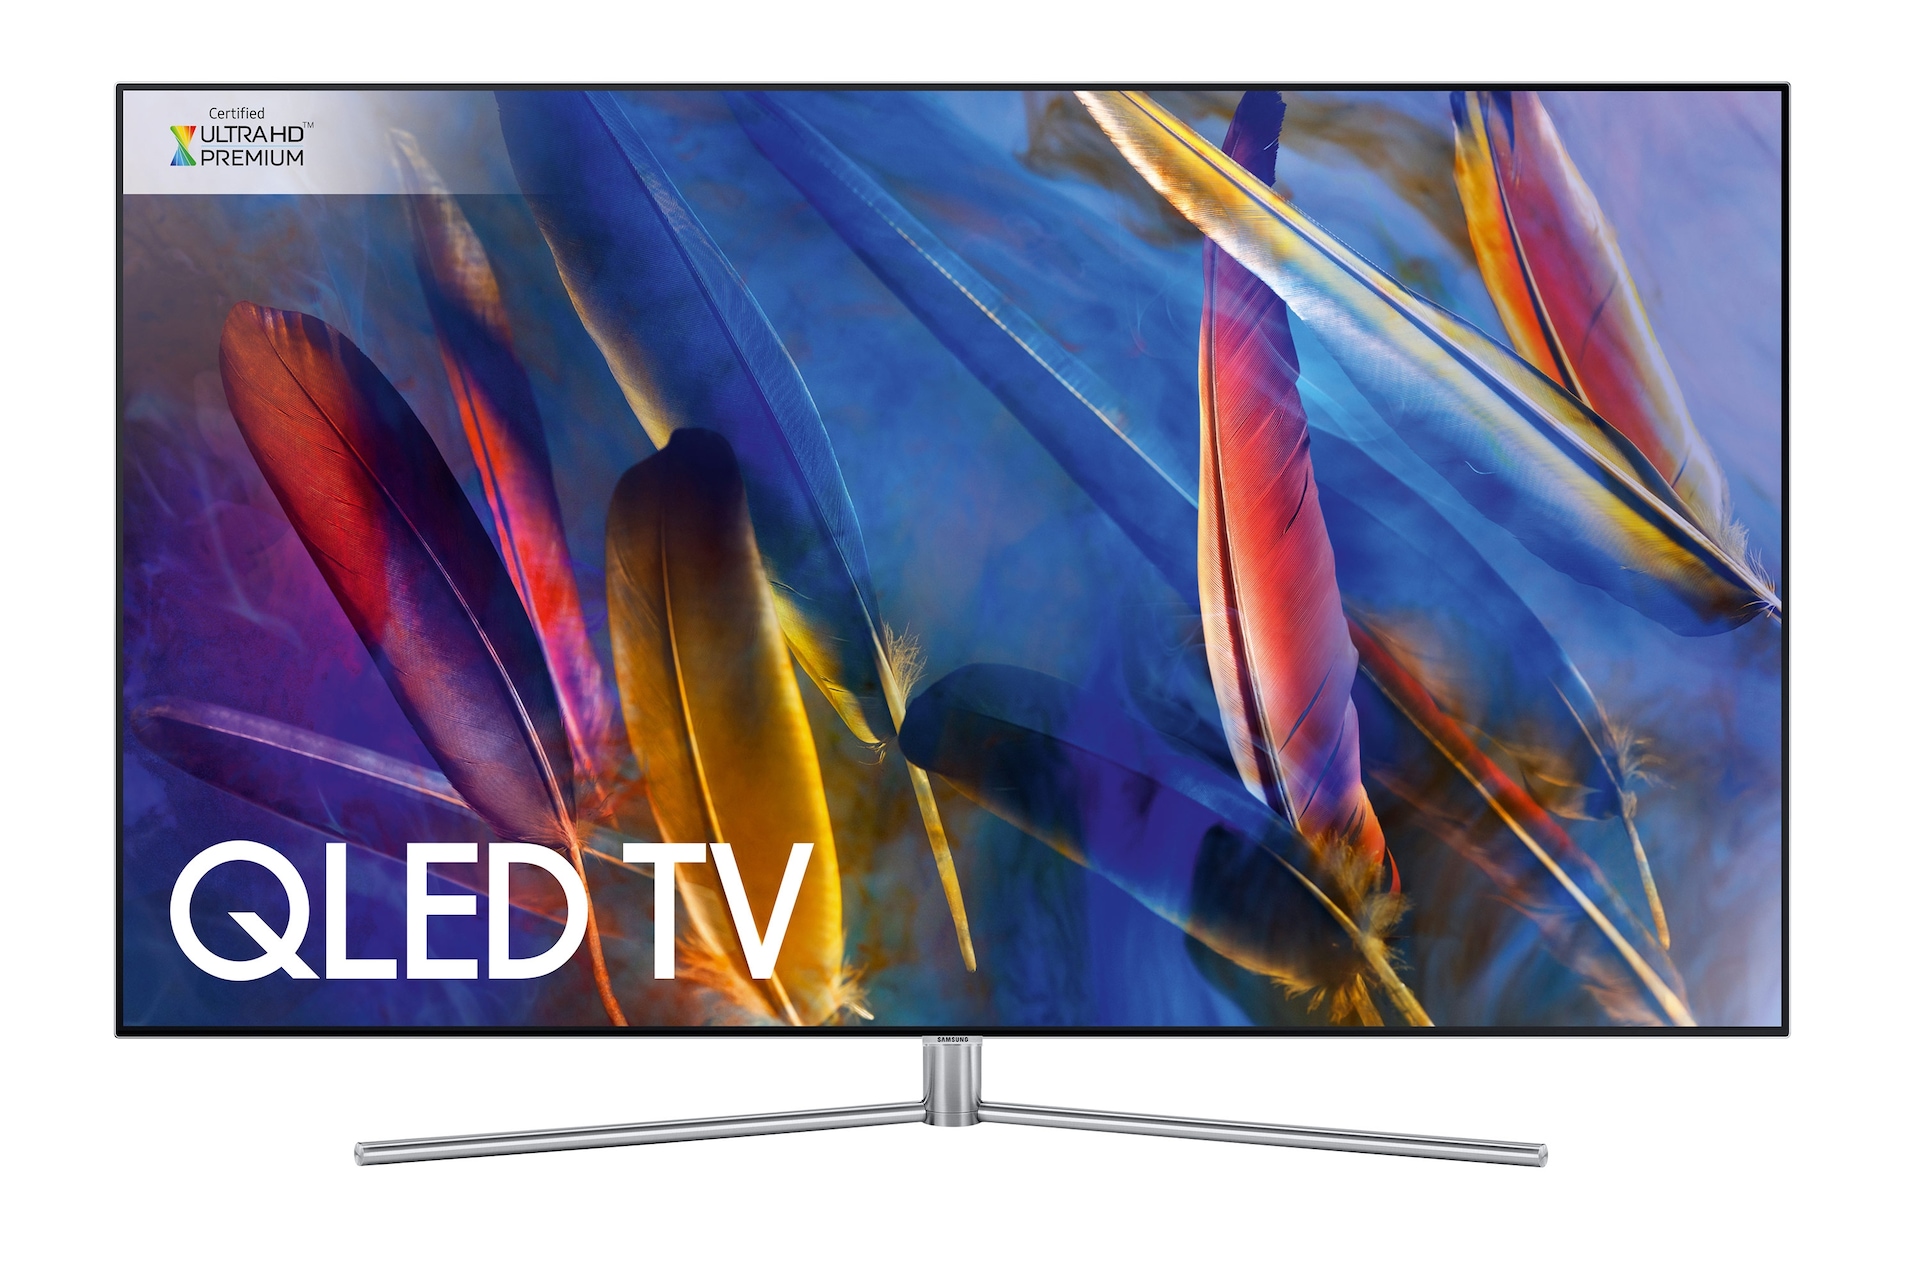 intelligens Nord Vest Blueprint 49" Q7F QLED 4K Certified Ultra HD Premium HDR 1500 Smart TV | Samsung  Support UK